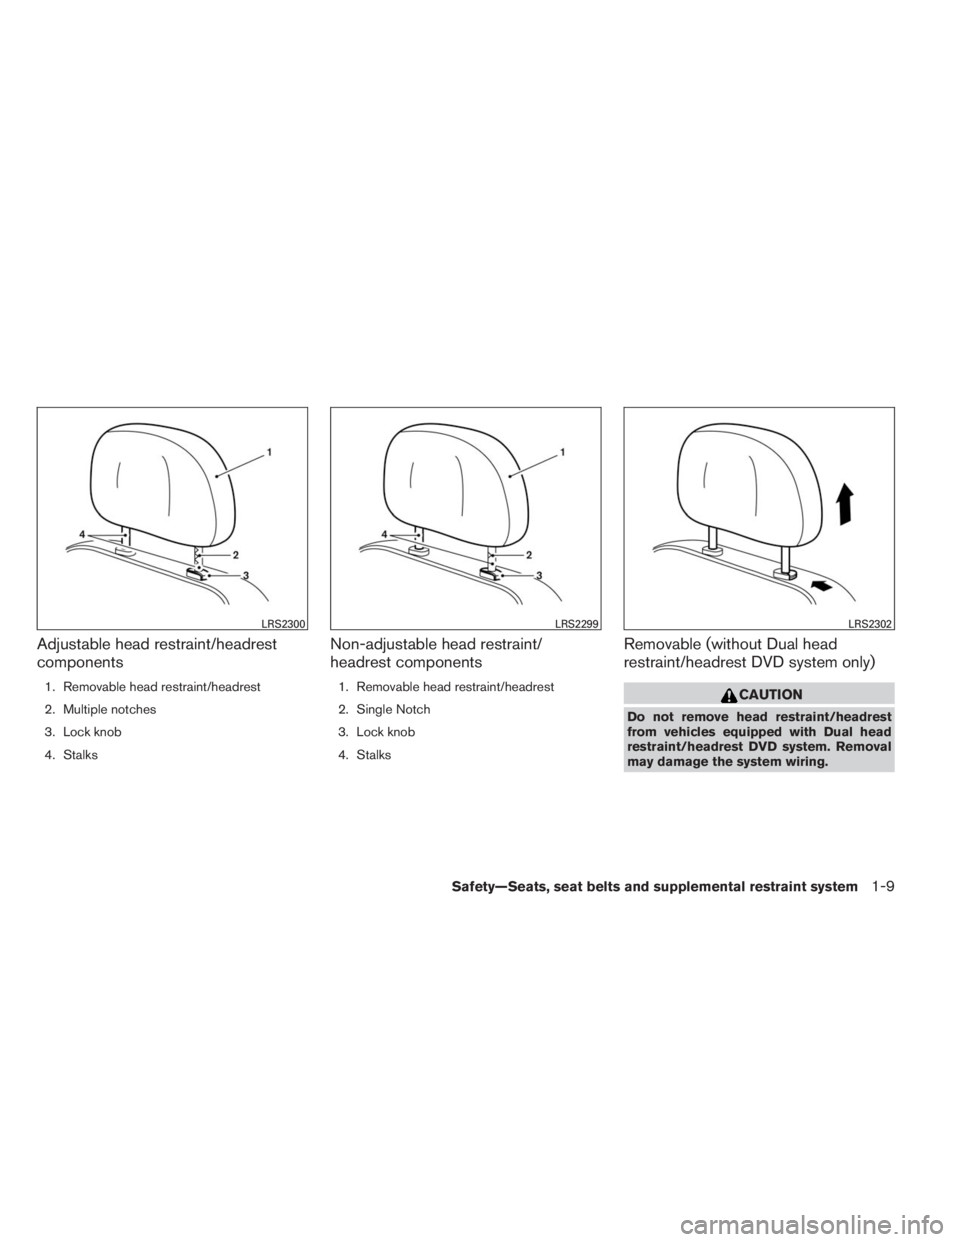 INFINITI QX60 2014 Owners Guide Adjustable head restraint/headrest
components
1. Removable head restraint/headrest
2. Multiple notches
3. Lock knob
4. Stalks
Non-adjustable head restraint/
headrest components
1. Removable head restr